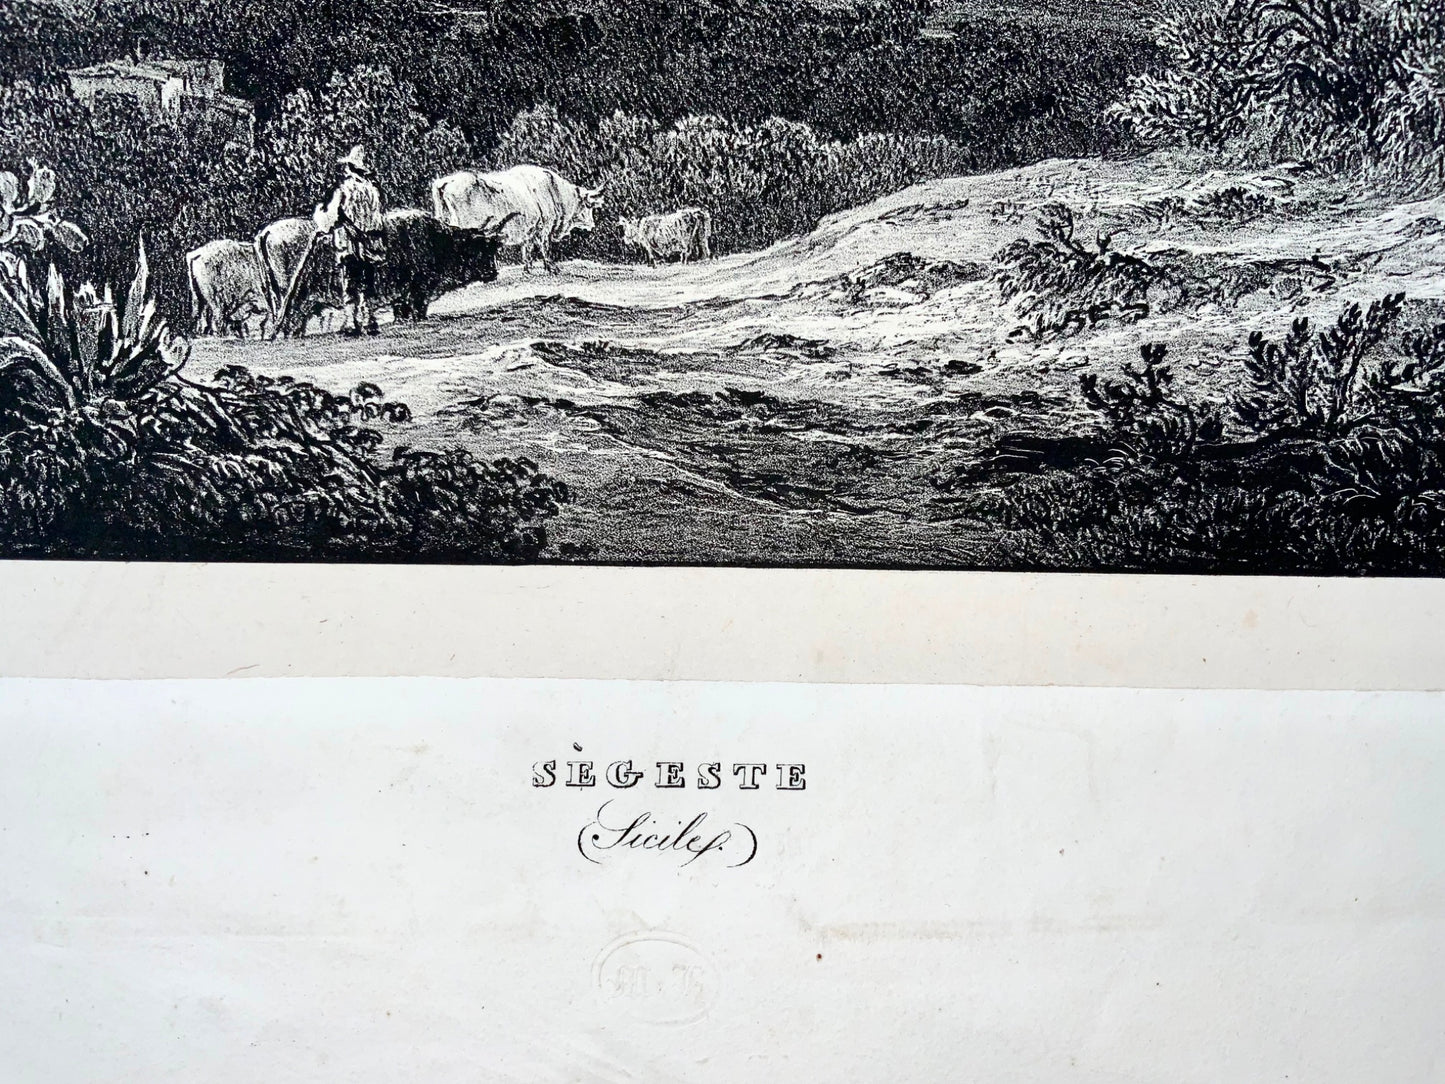 1833 Segesta Sicily, Muller & Horner, Ledoux sc., large stone lithograph